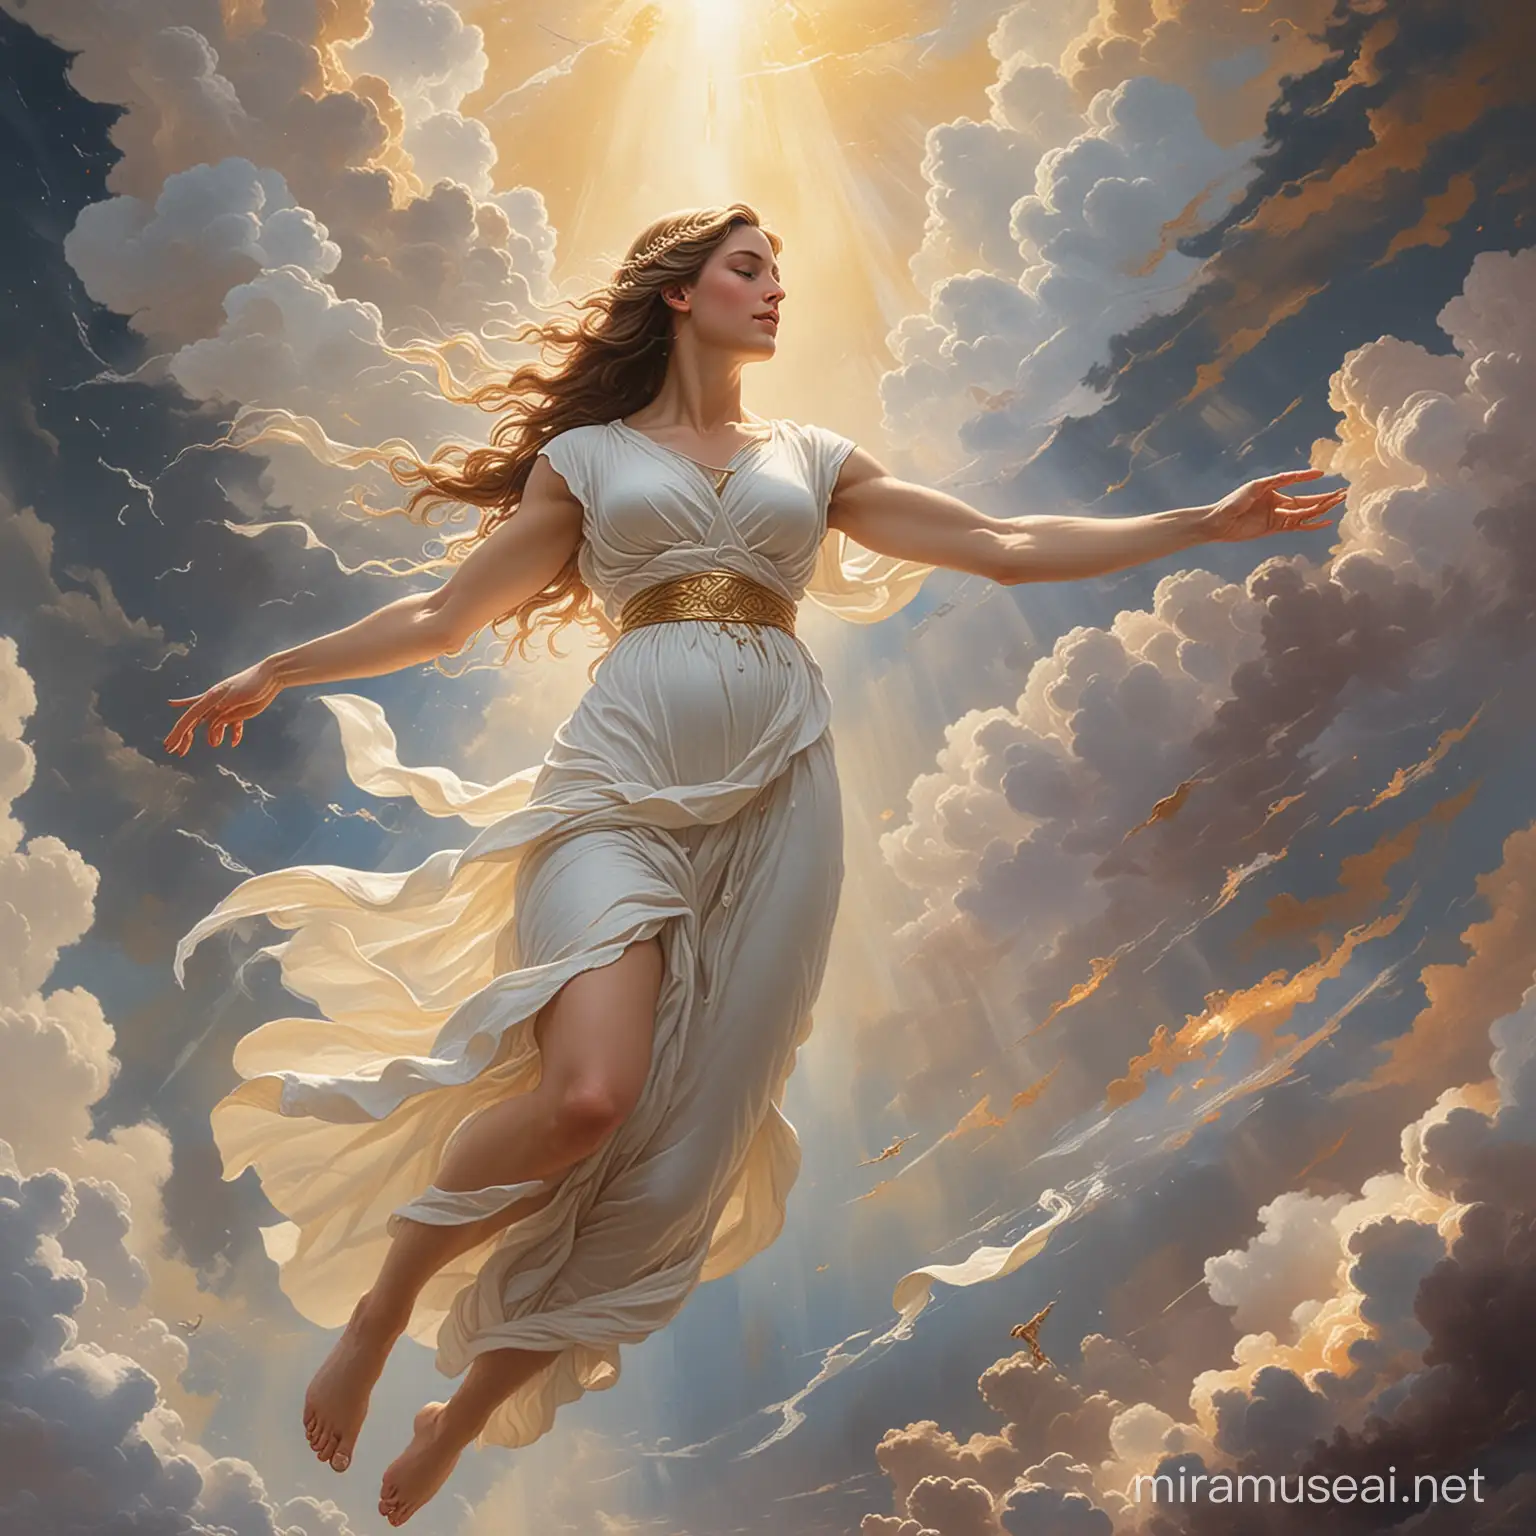 Goddess Descending A Heavenly Encounter in Oil Painting